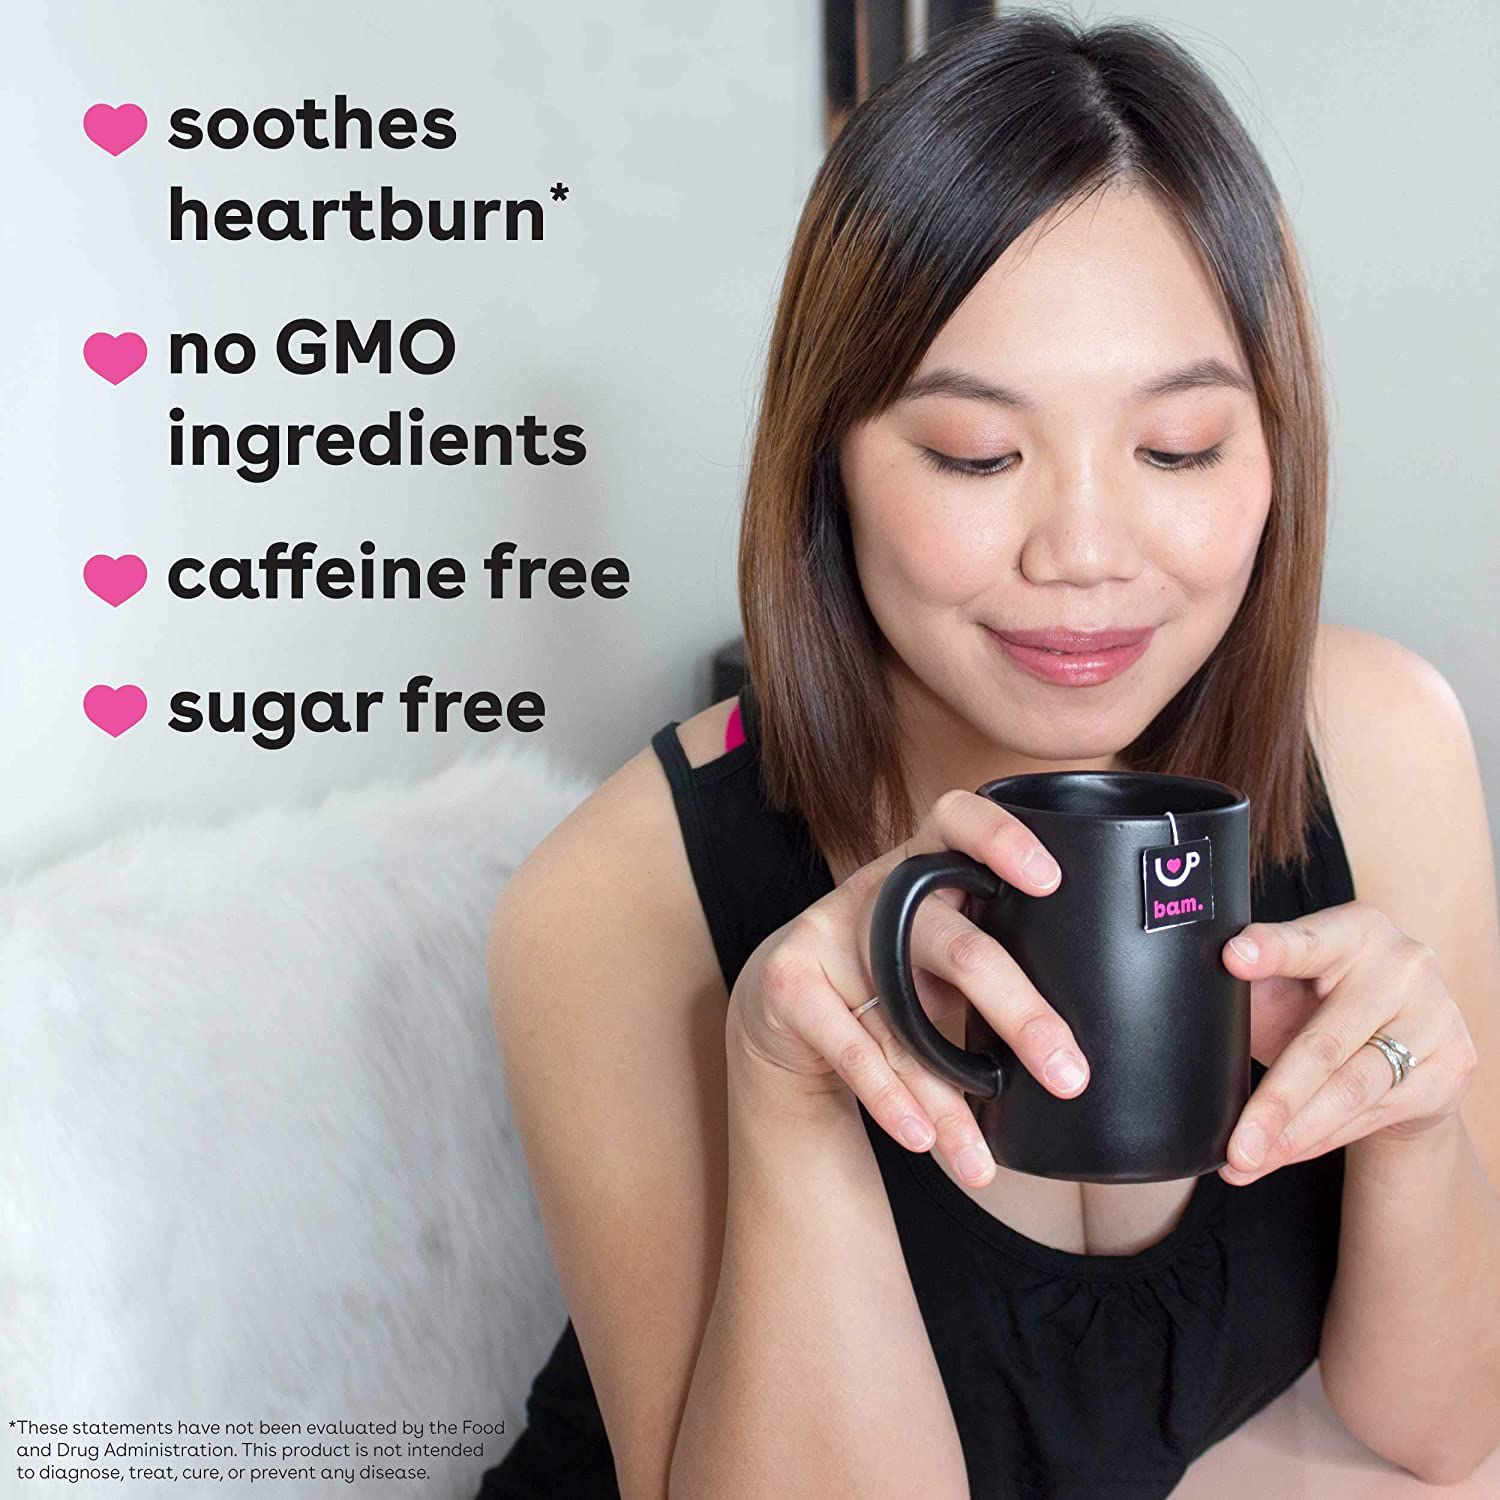 Bamboobies Pregnancy Tea for Nursing Support | 10 Tea Bags | Mango Passion Fruit | Boosts Milk Production | Organic, Non GMO, Caffeine Free, & Sugar Free | Breastfeeding Supplement | Herbal Tea